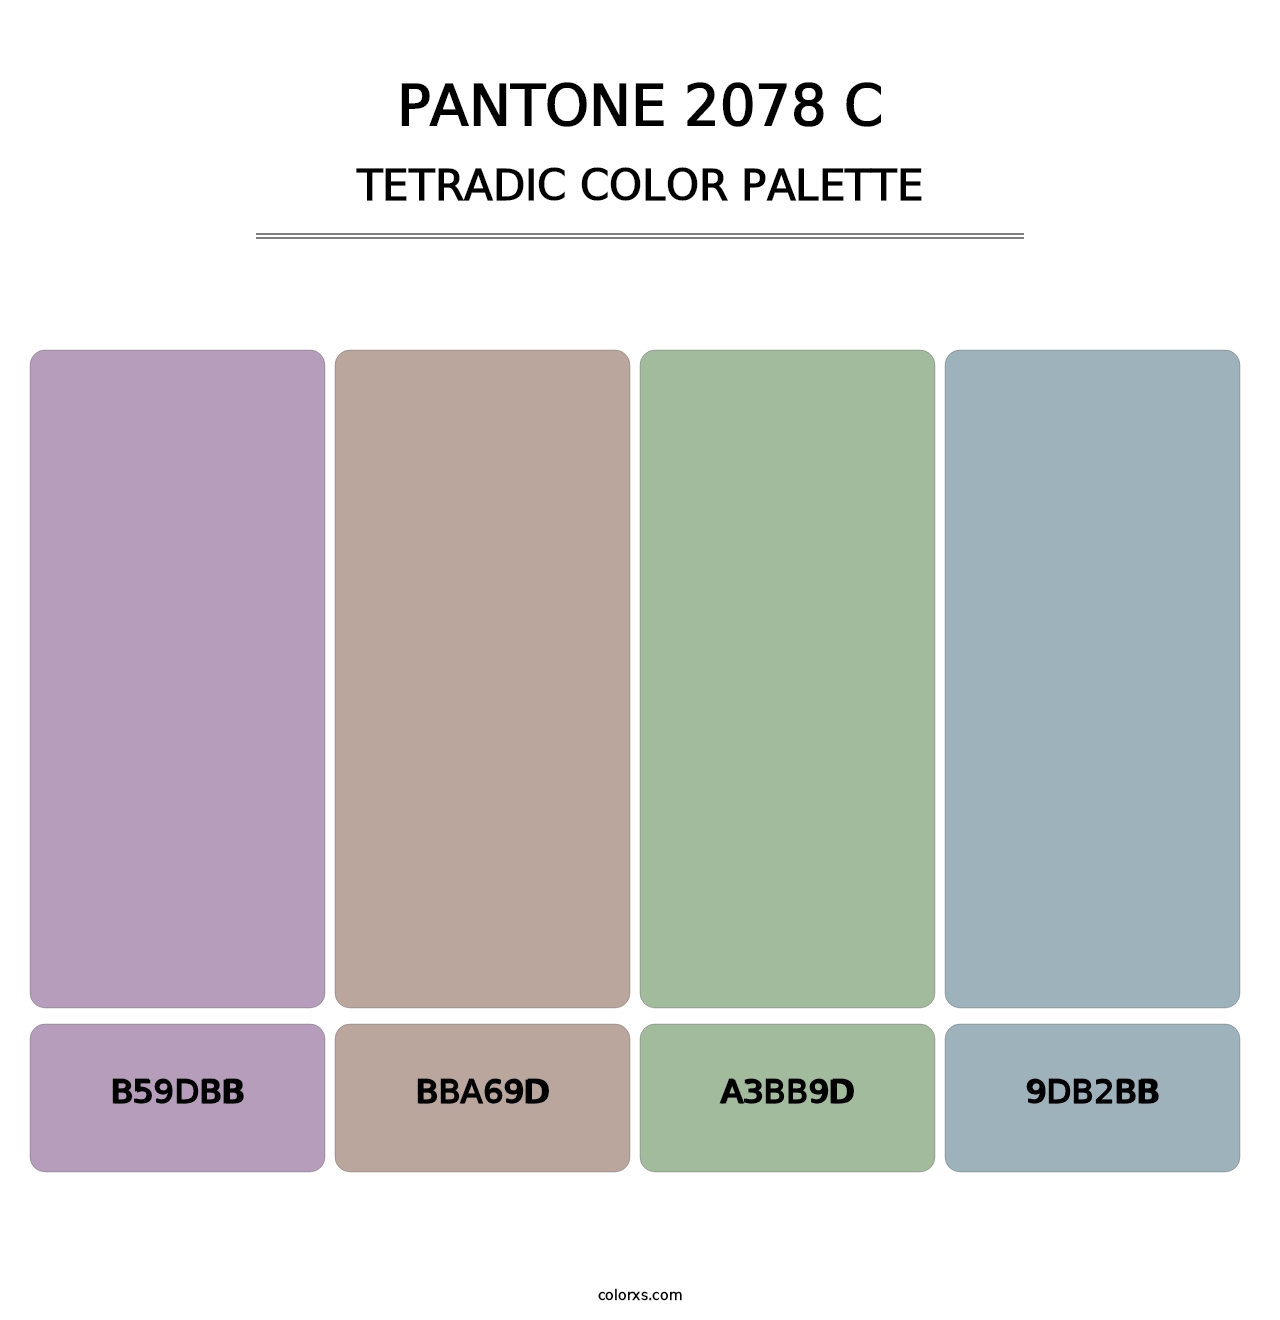 PANTONE 2078 C - Tetradic Color Palette